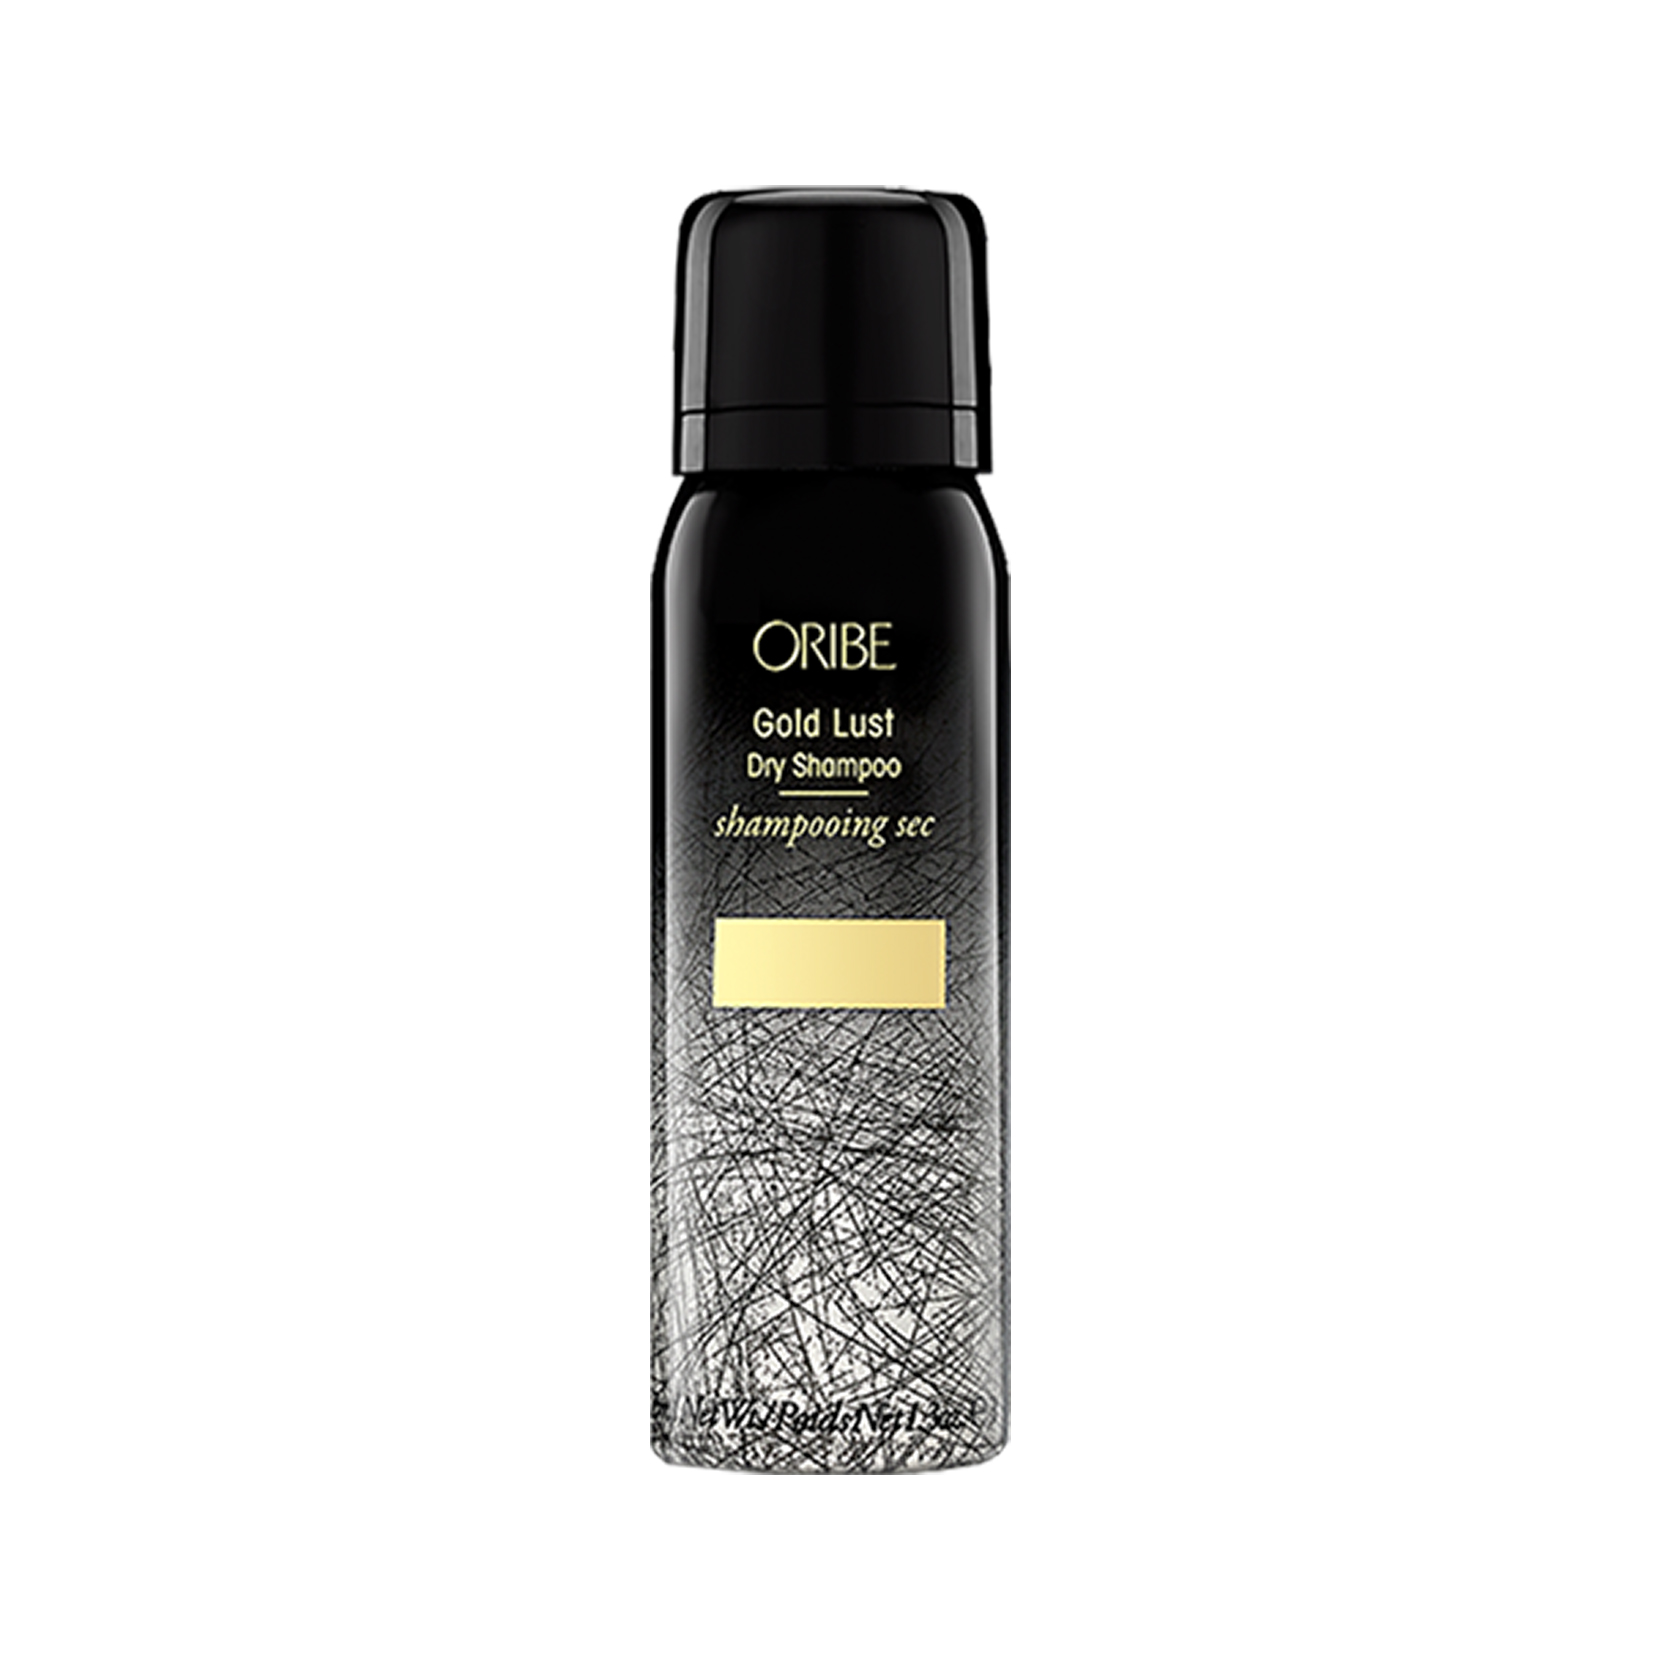 oribe travel size dry shampoo